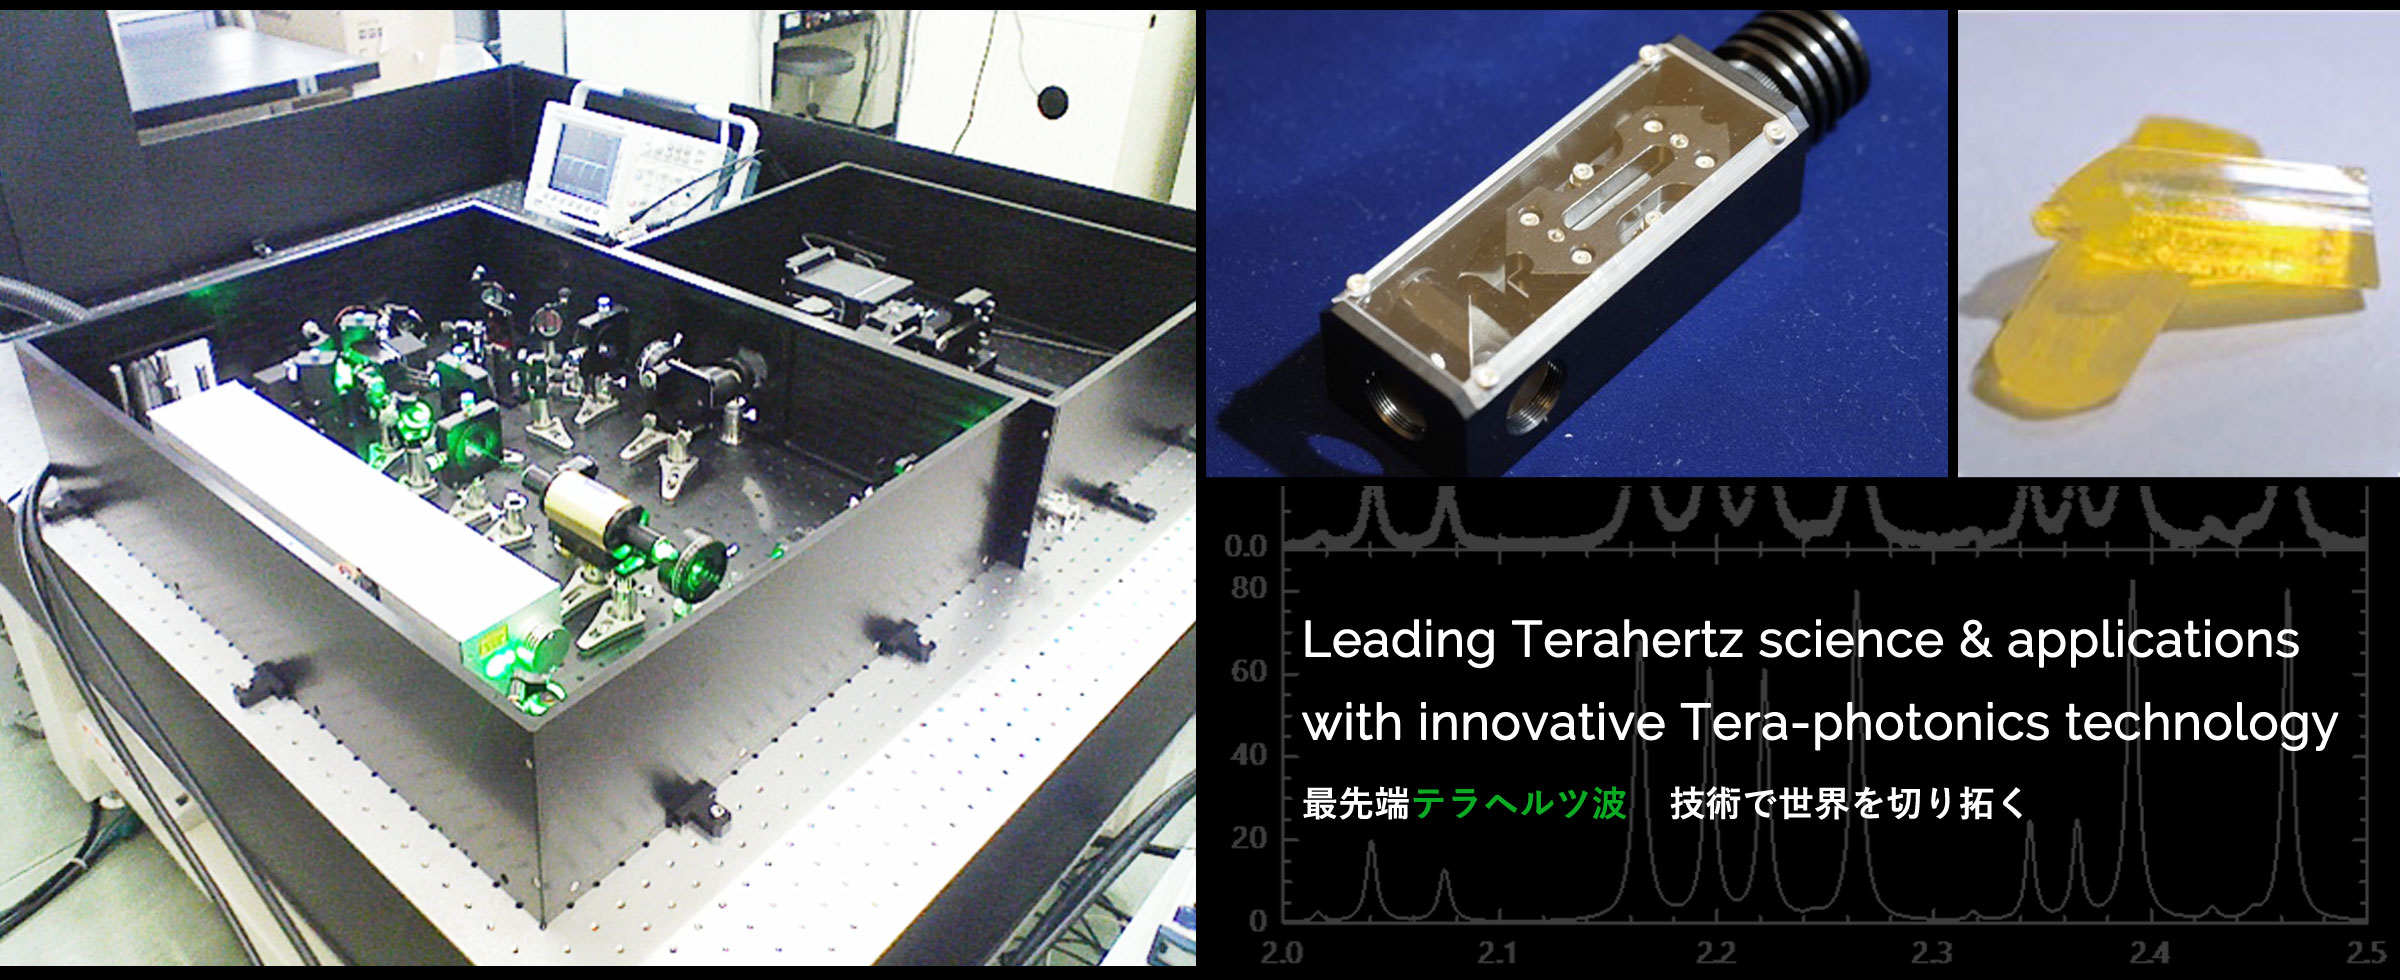 Leading Terahertz science & applications with innovative Tera-photonics technology 最先端テラヘルツ波技術で世界を切り拓く